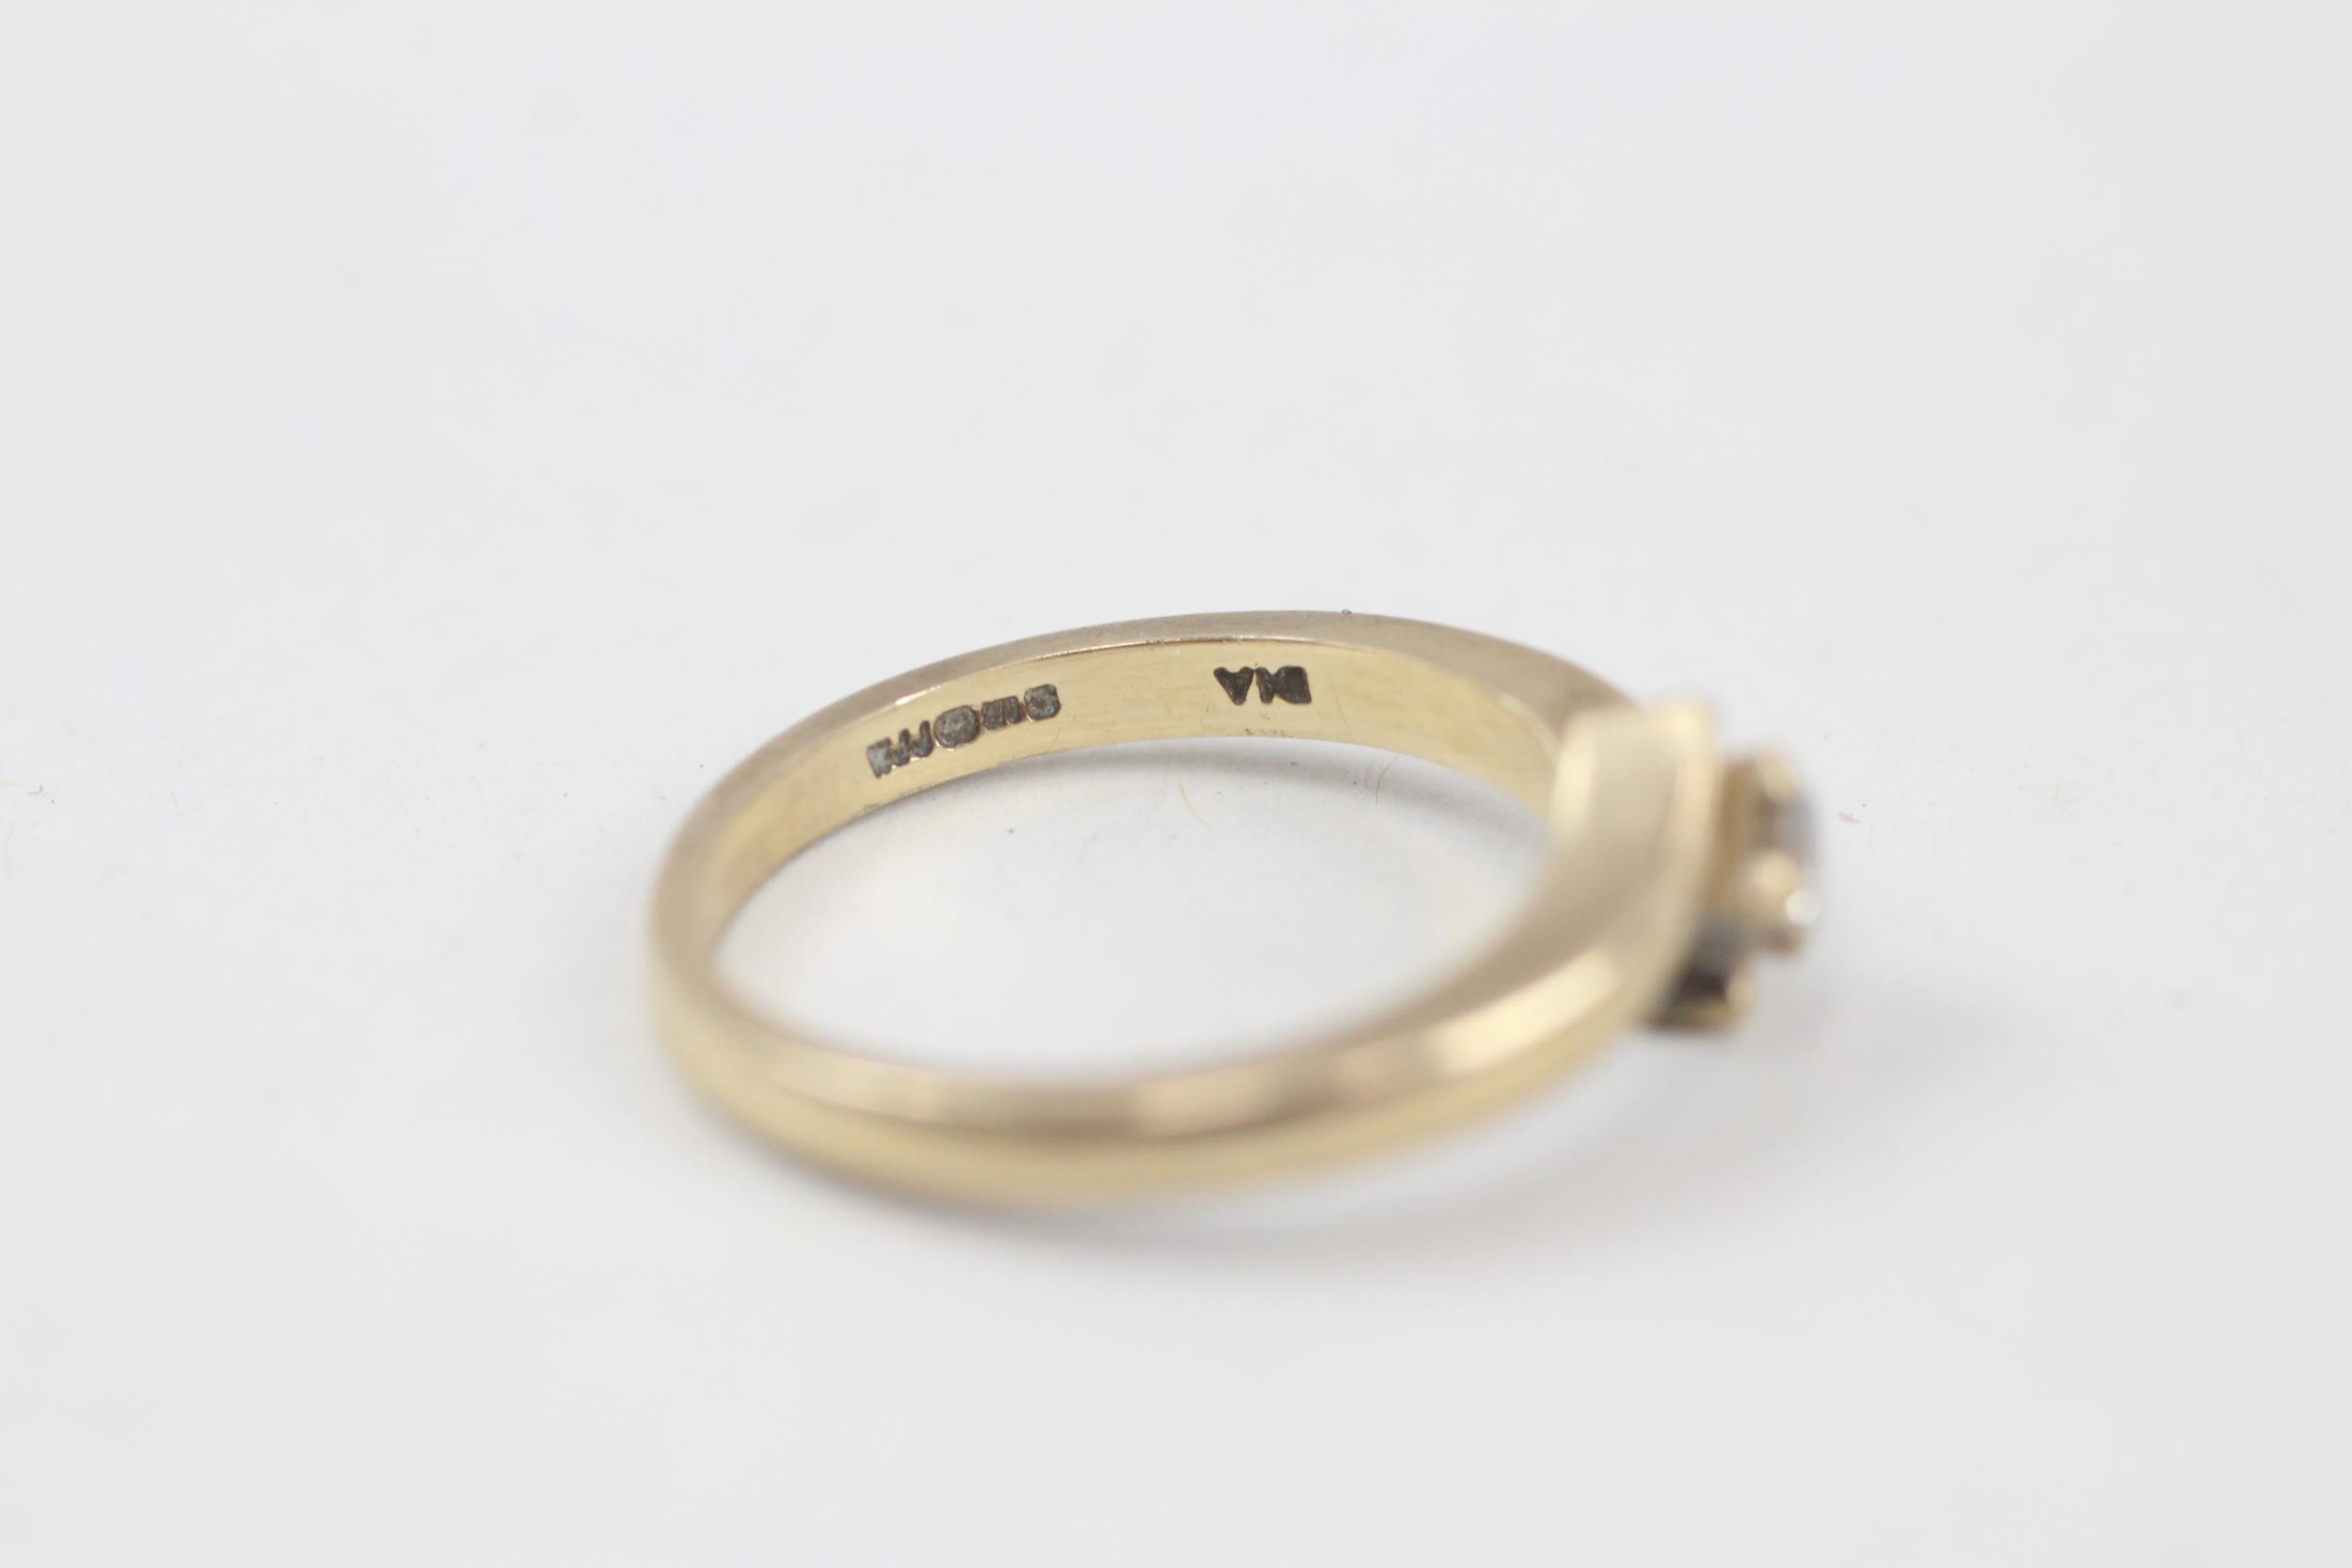 9ct gold circular cut diamond single stone ring Size M - 2.6 g - Image 6 of 7